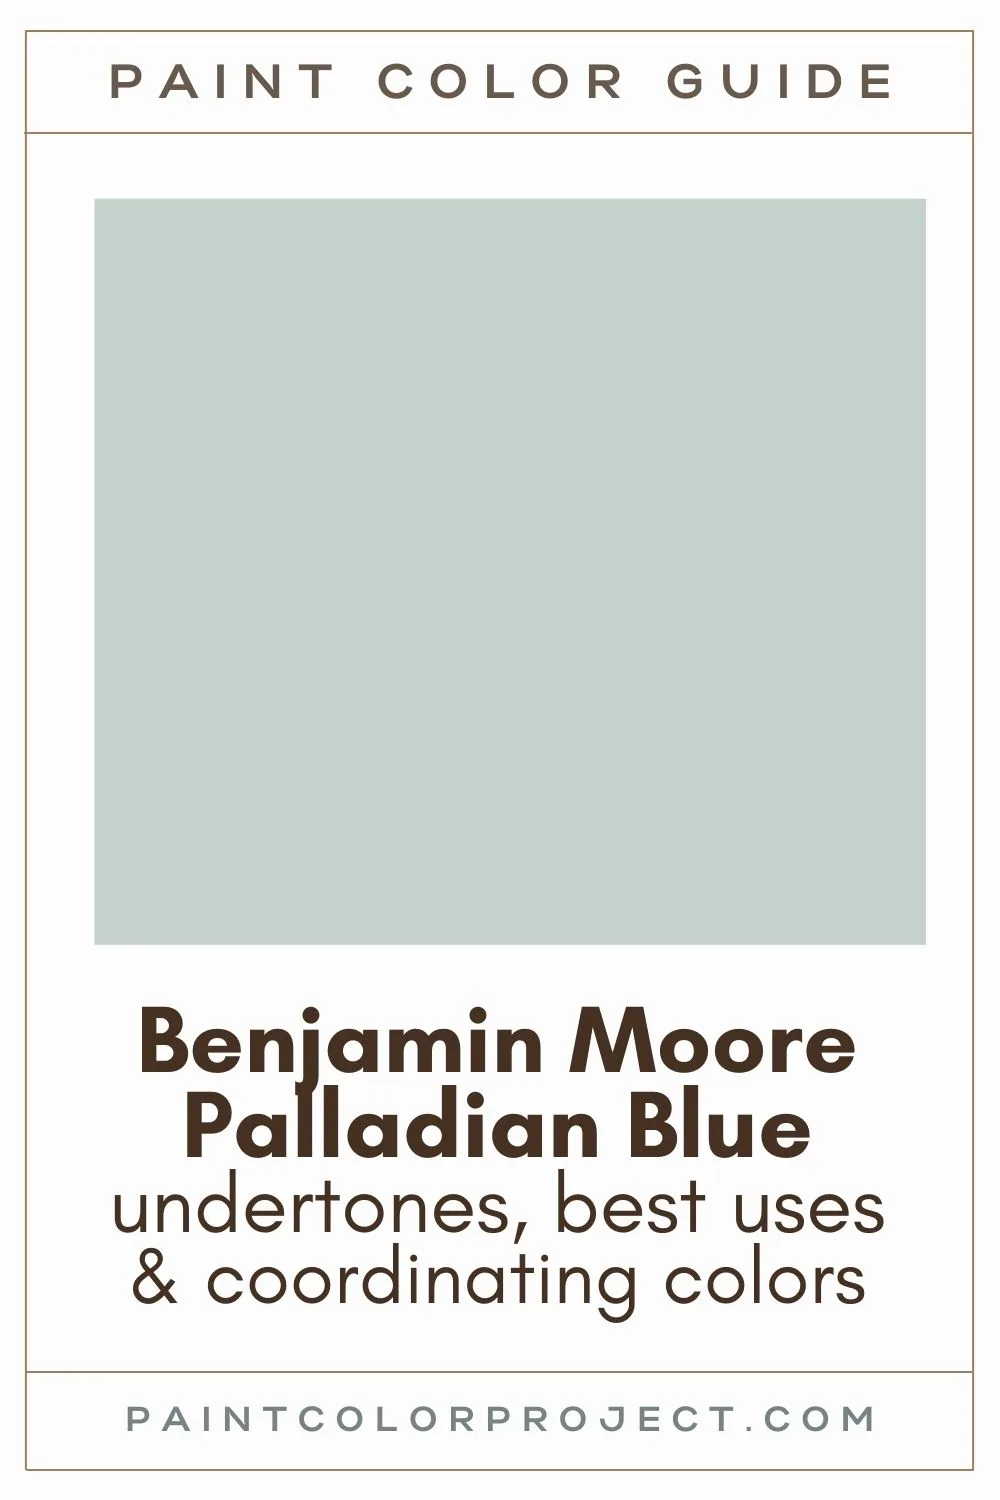 Benjamin Moore Palladian Blue Paint Color Guide.